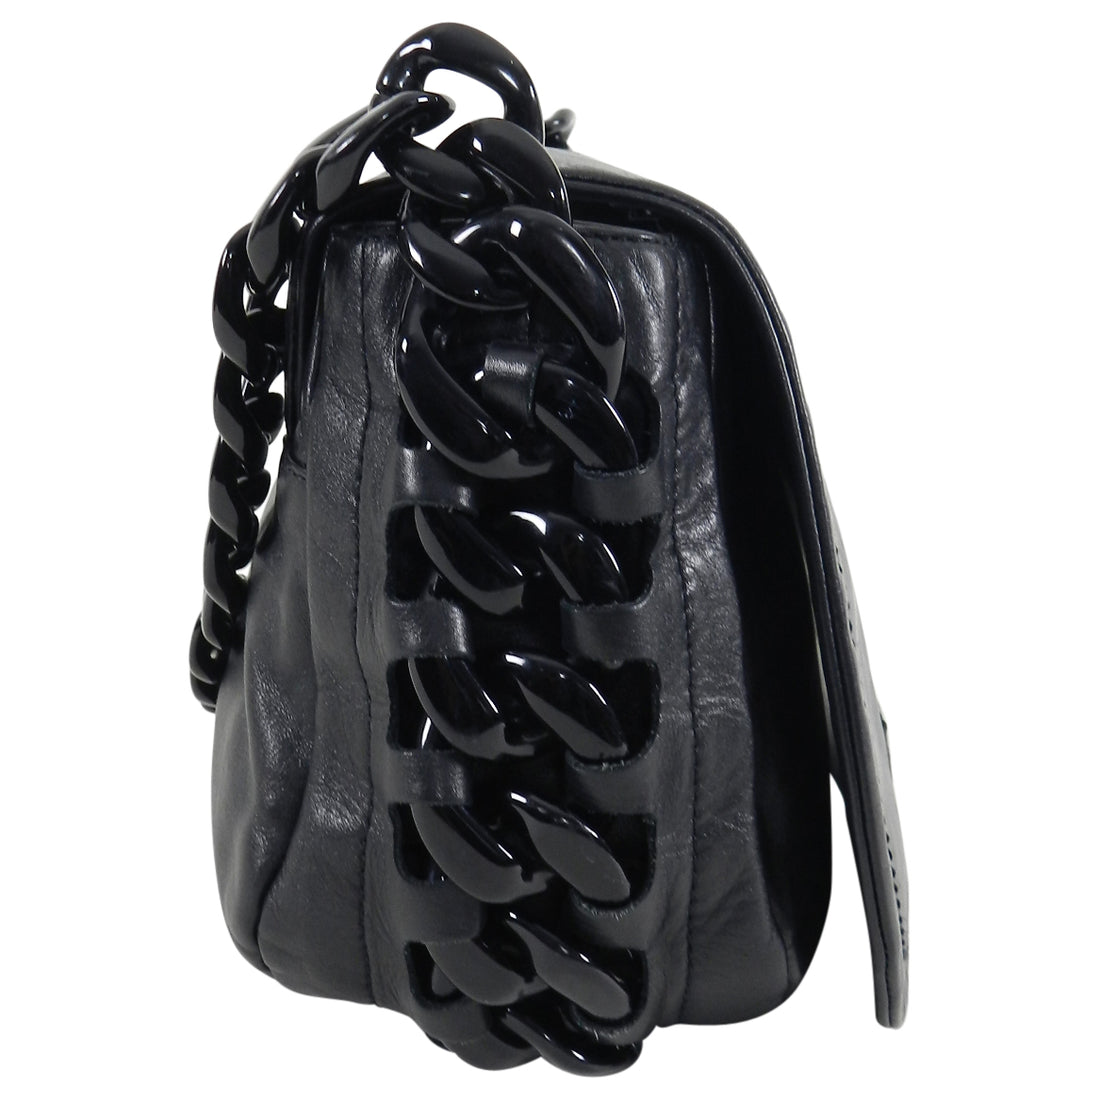 Chanel Modern Chain CC Logo Shoulder Bag